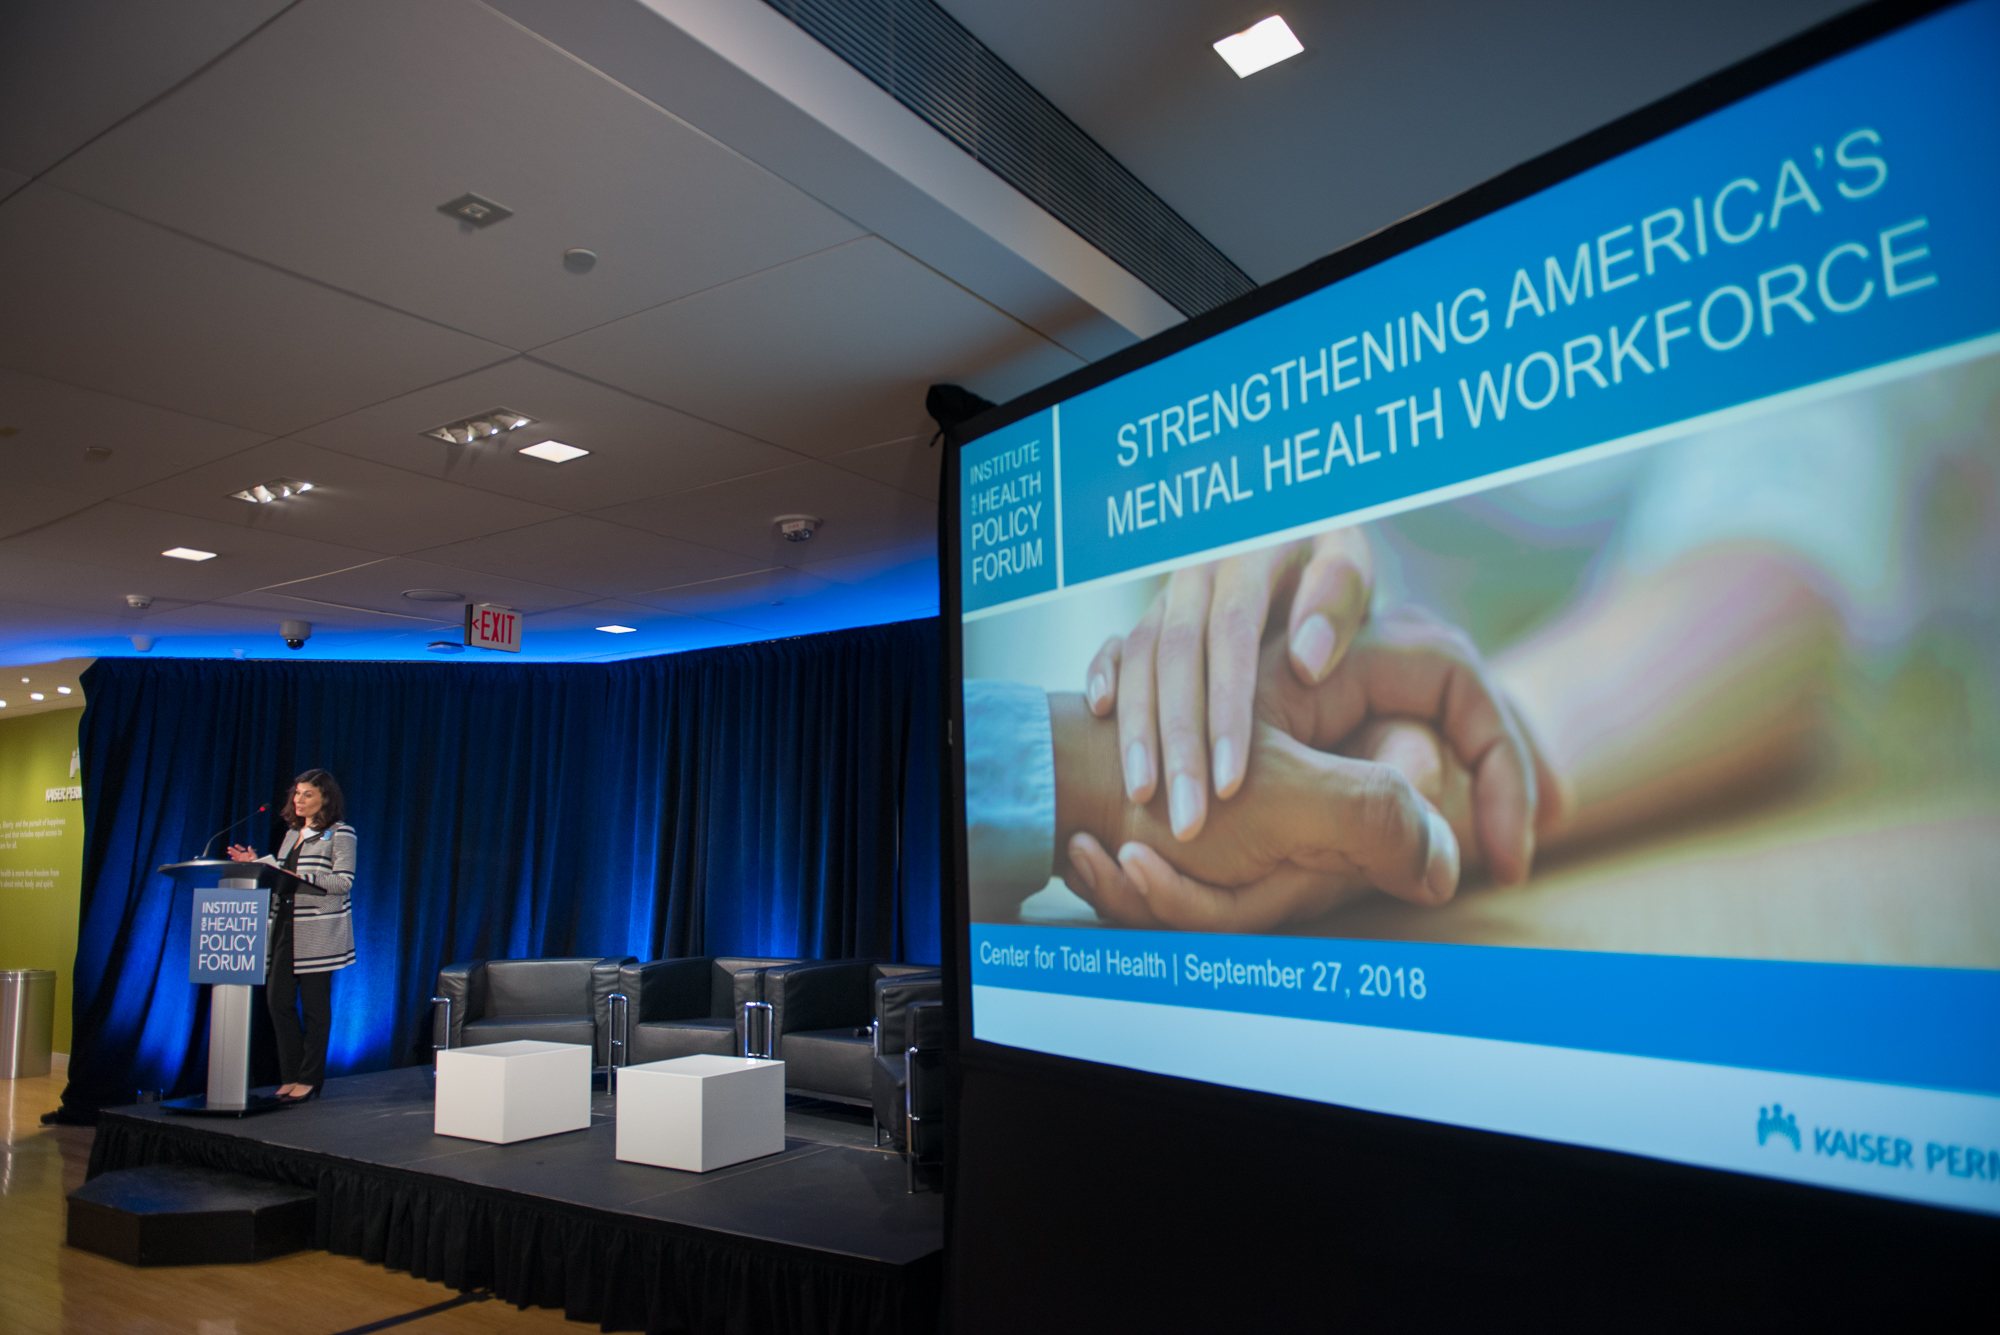 Strengthening America’s Mental Health Workforce | Sept. 27, 2018